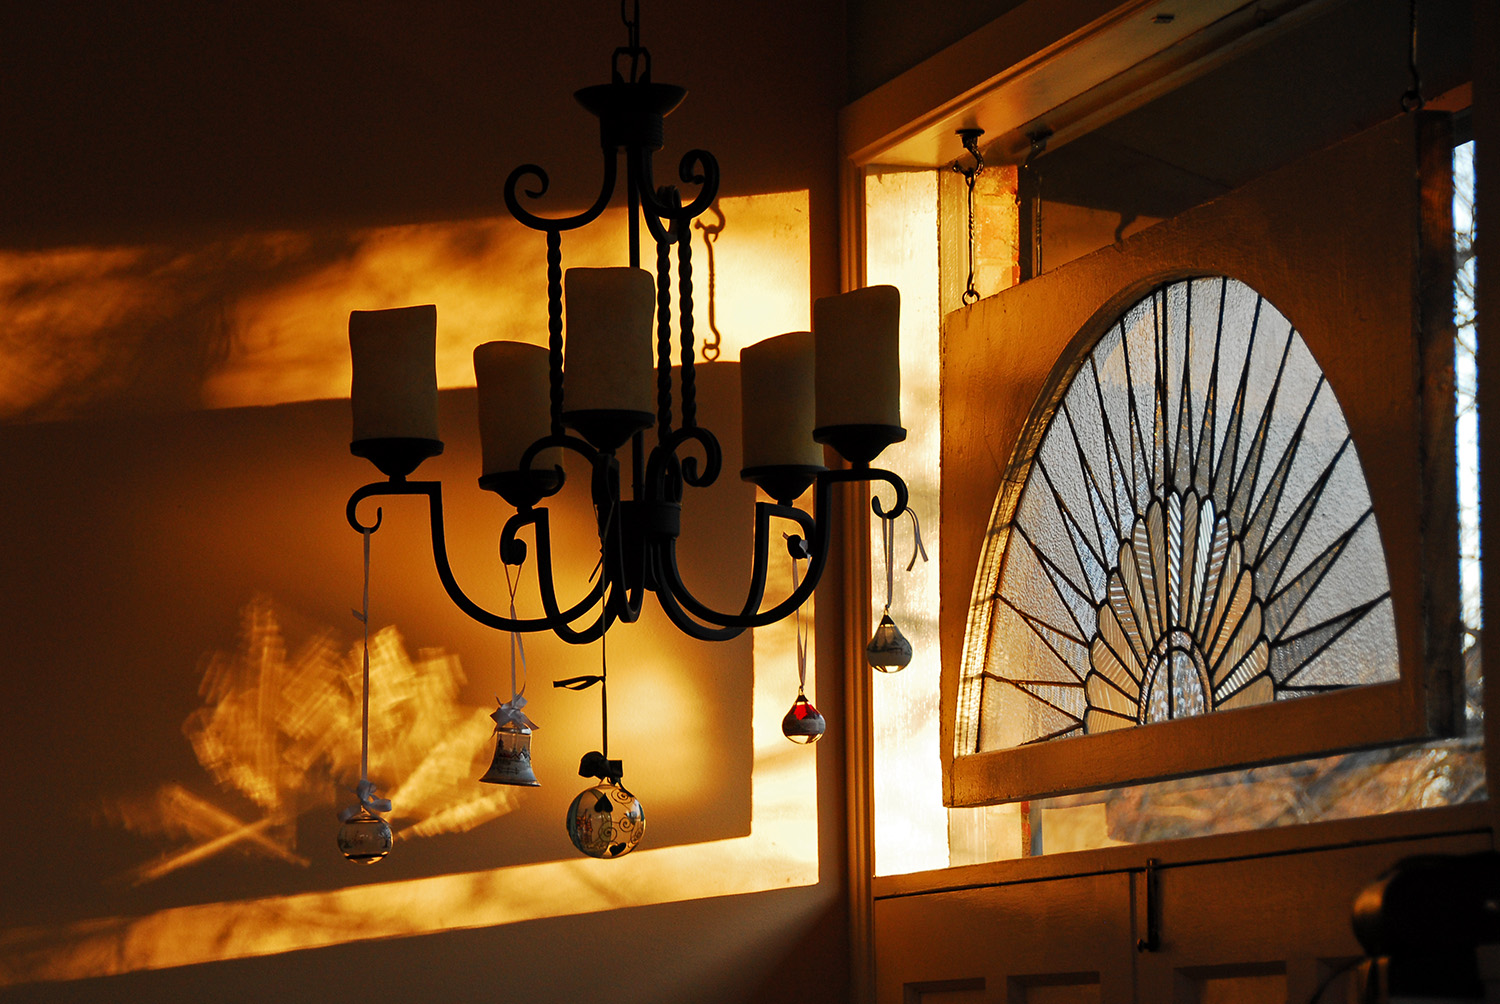 Architecture_Home_Decor_Chandelier_Christmas_Ornaments_Shadows_Window_Golden_Hour.JPG